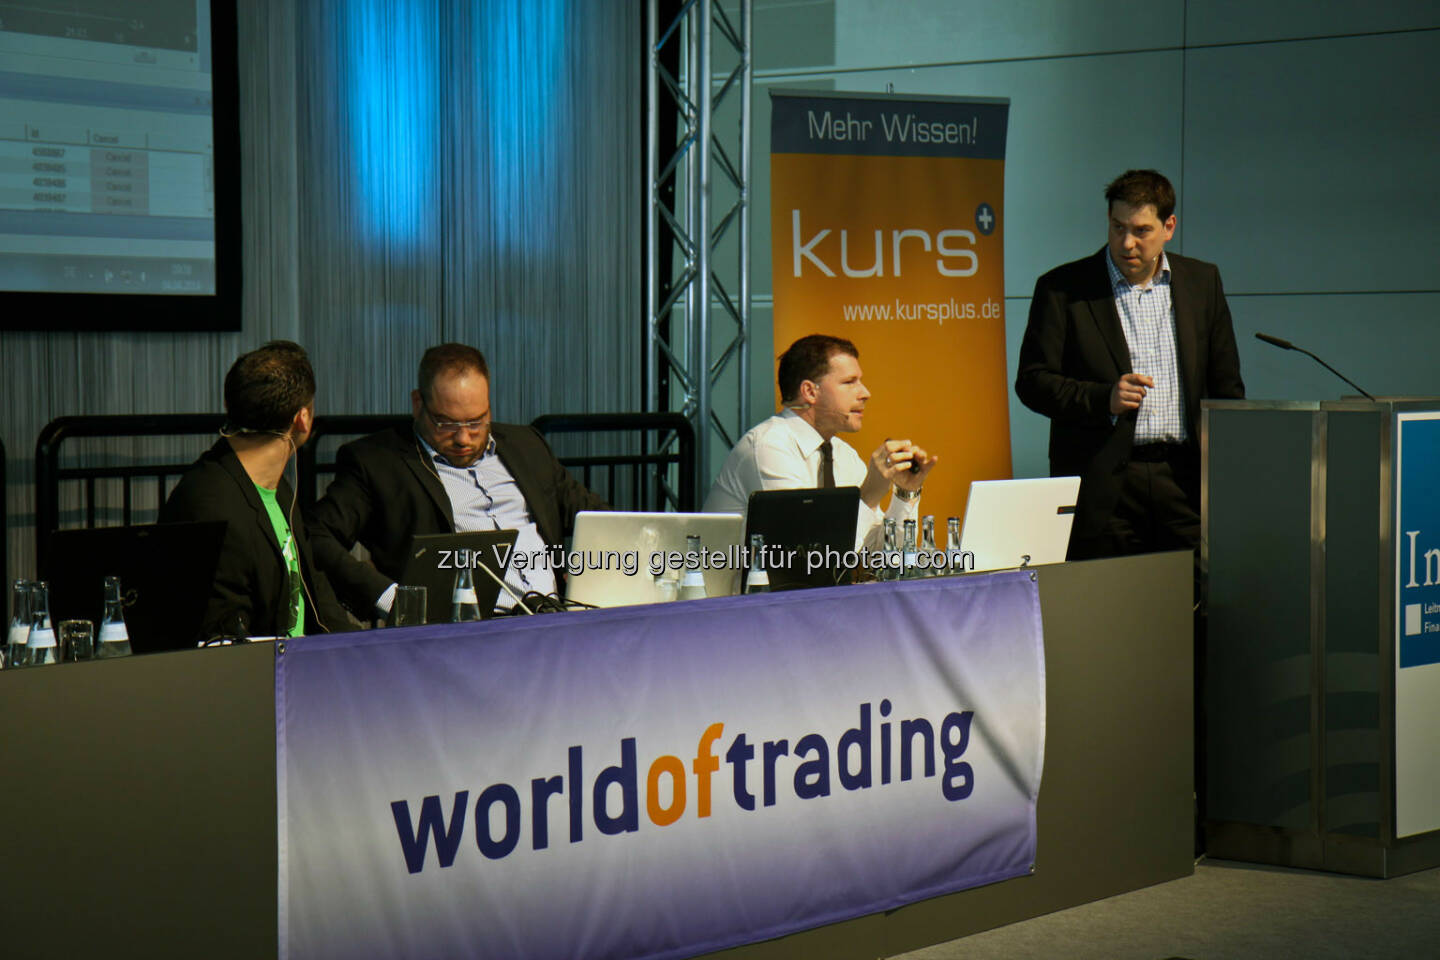 world of trading